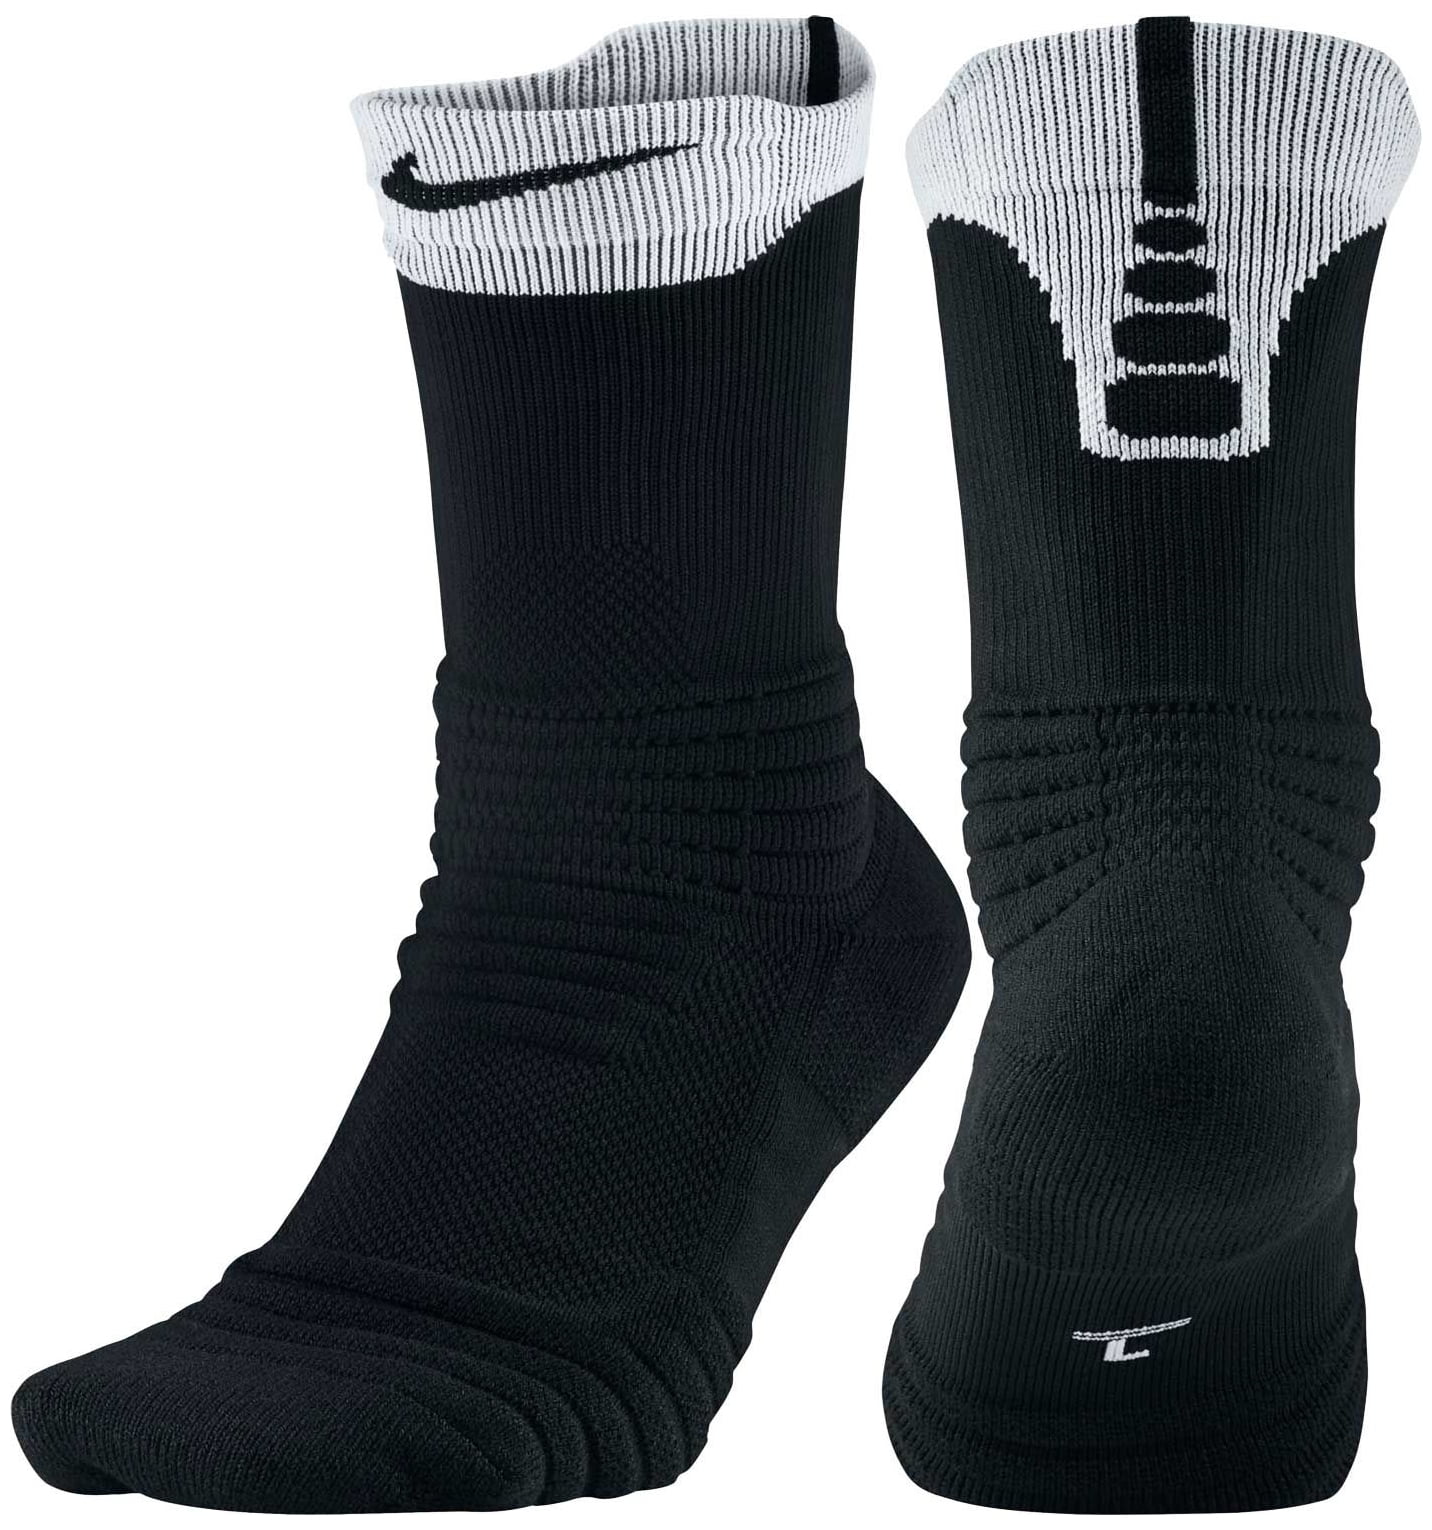 Nike Elite Versatility Crew Basketball Socks - Black/White/Black - M ...